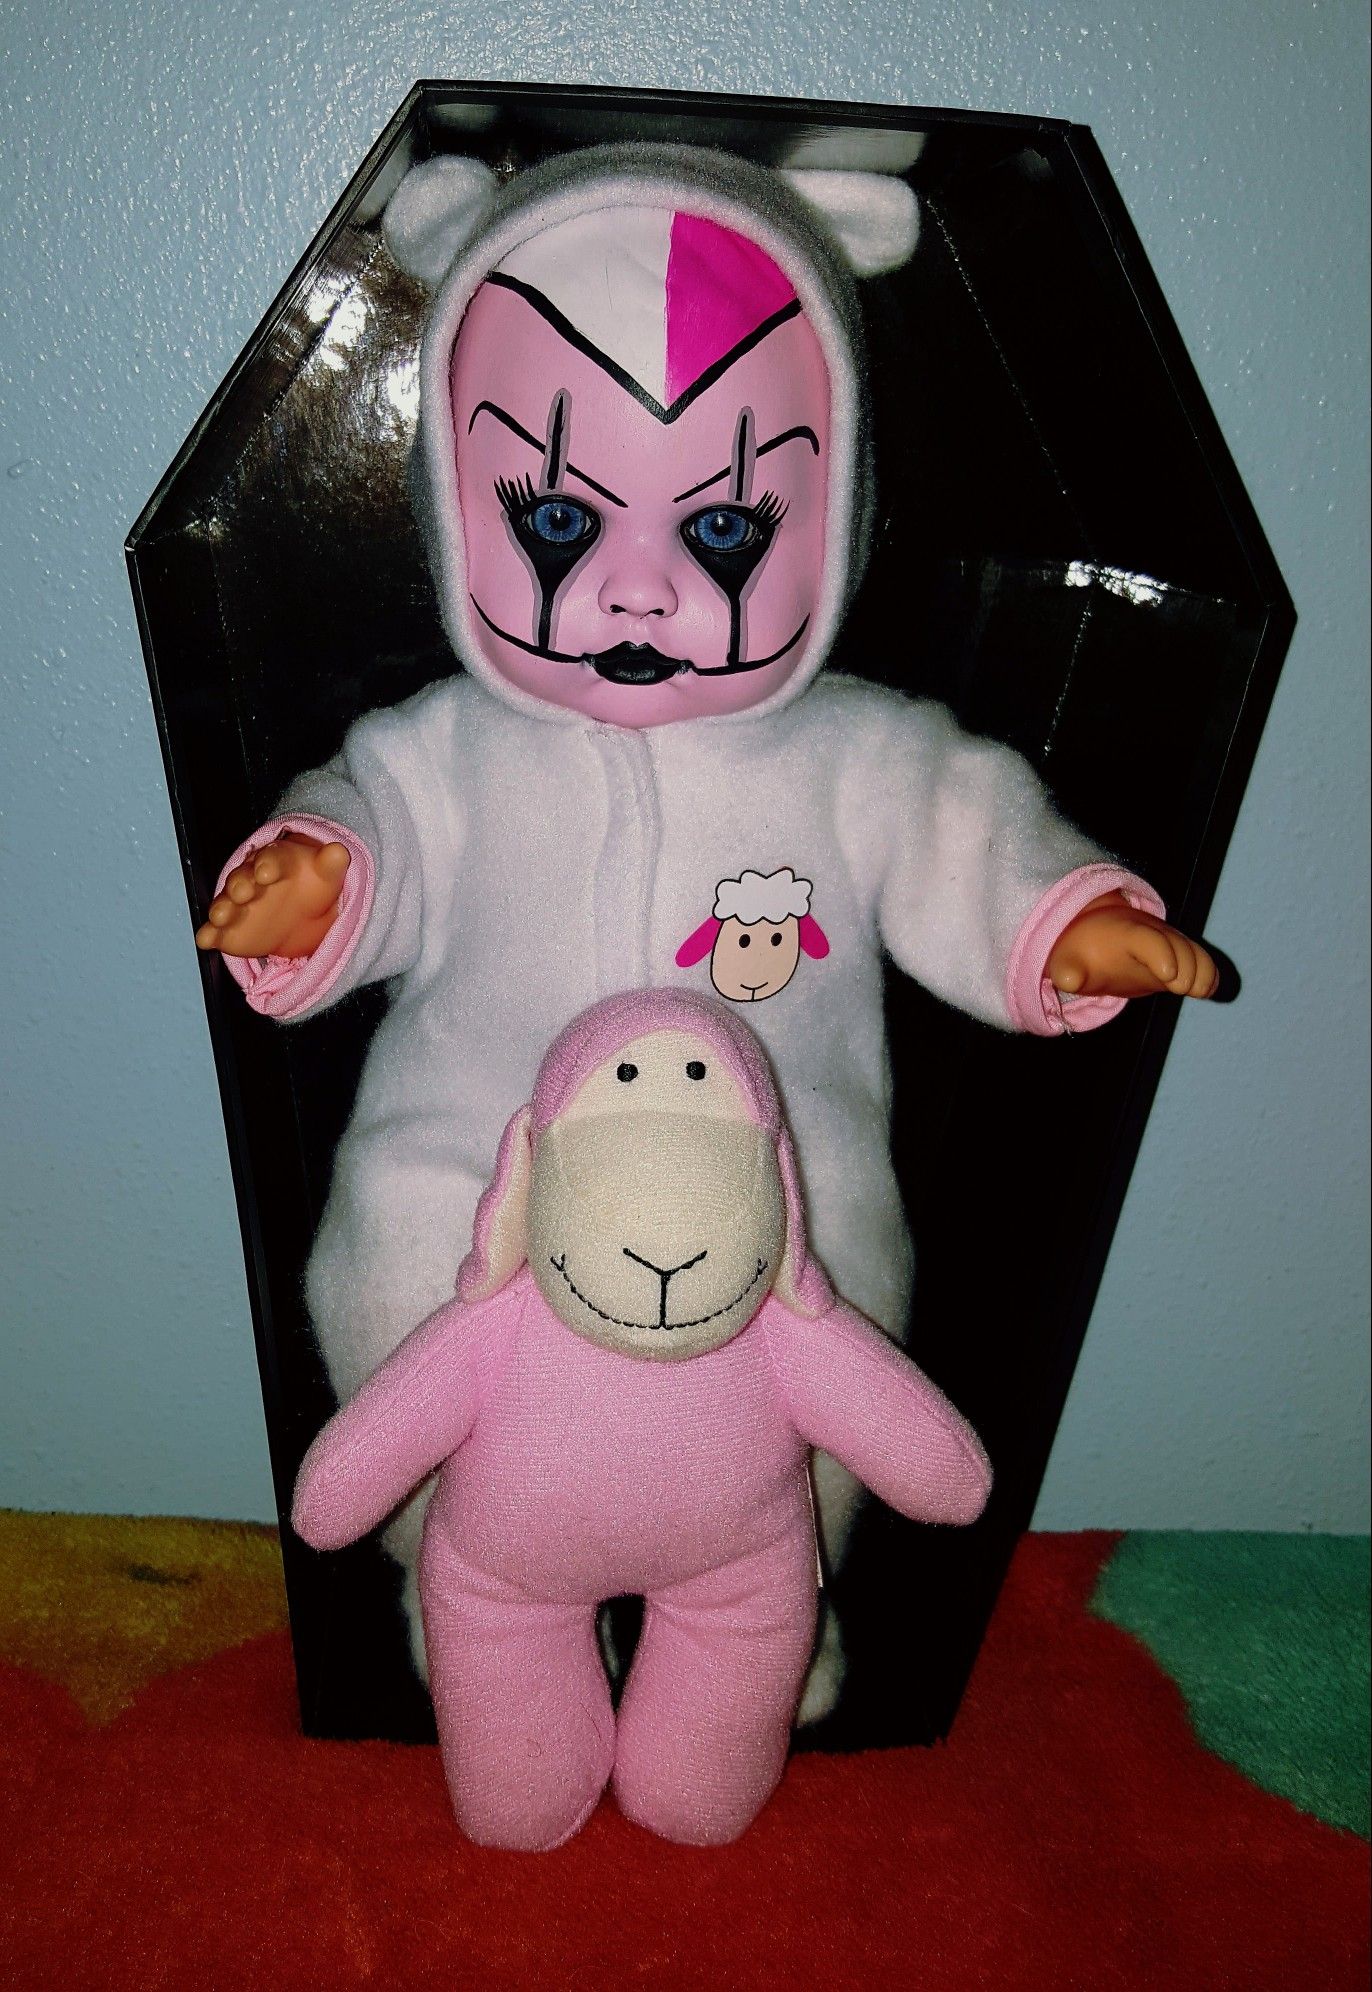 Creepy Lamby Baby & vampire doll bundle